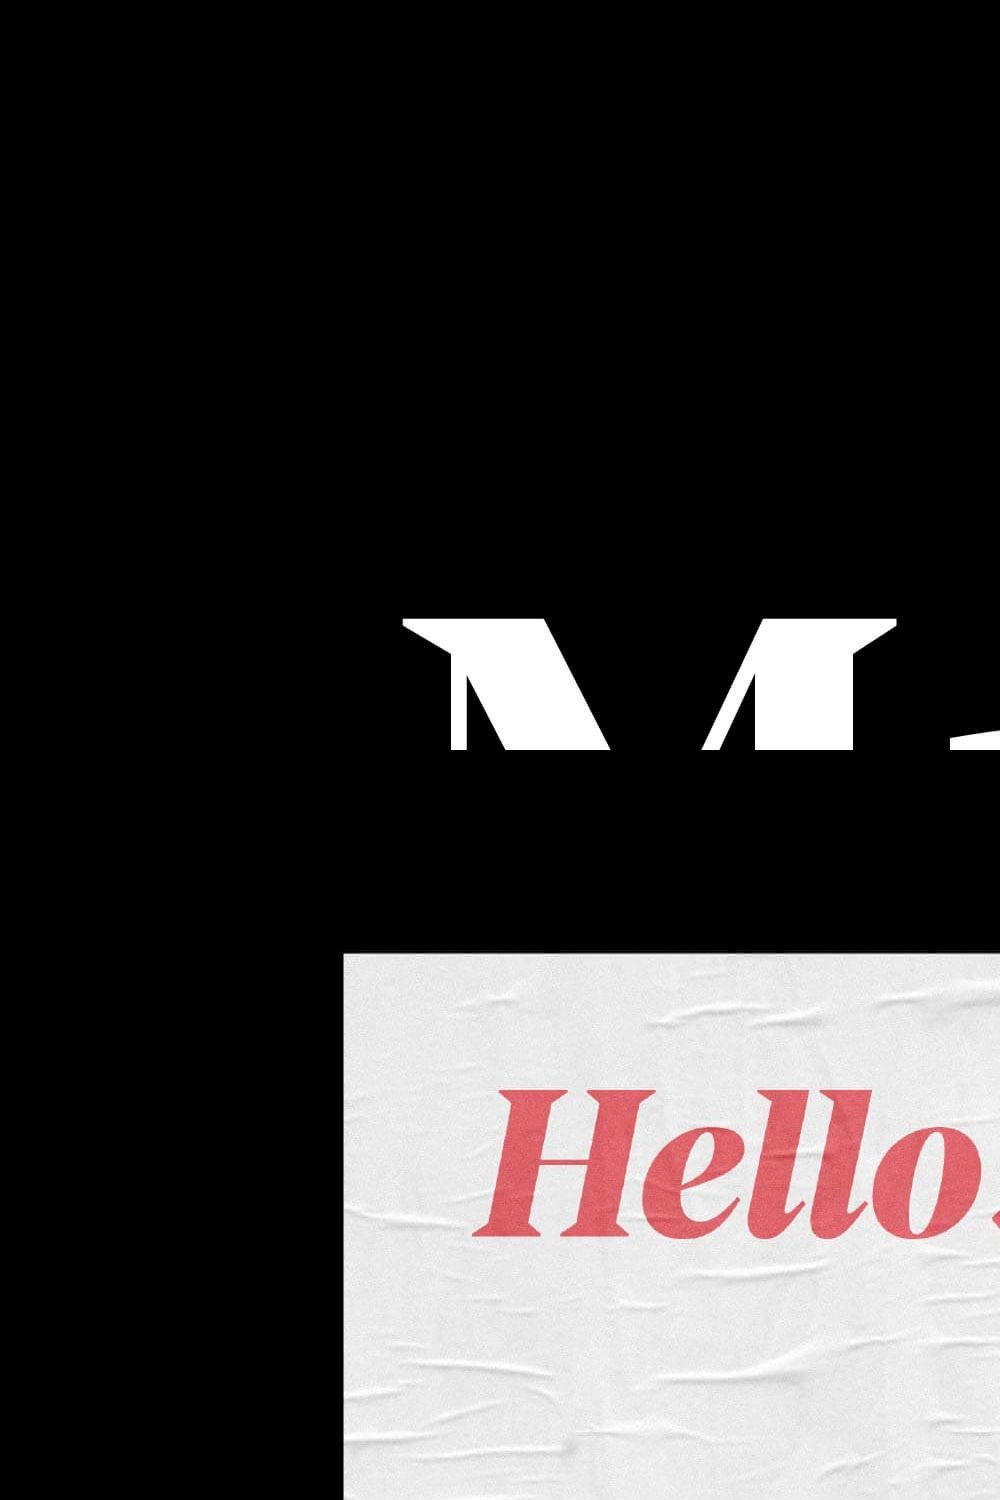 Manier – Sharp Serif Typeface pinterest preview image.